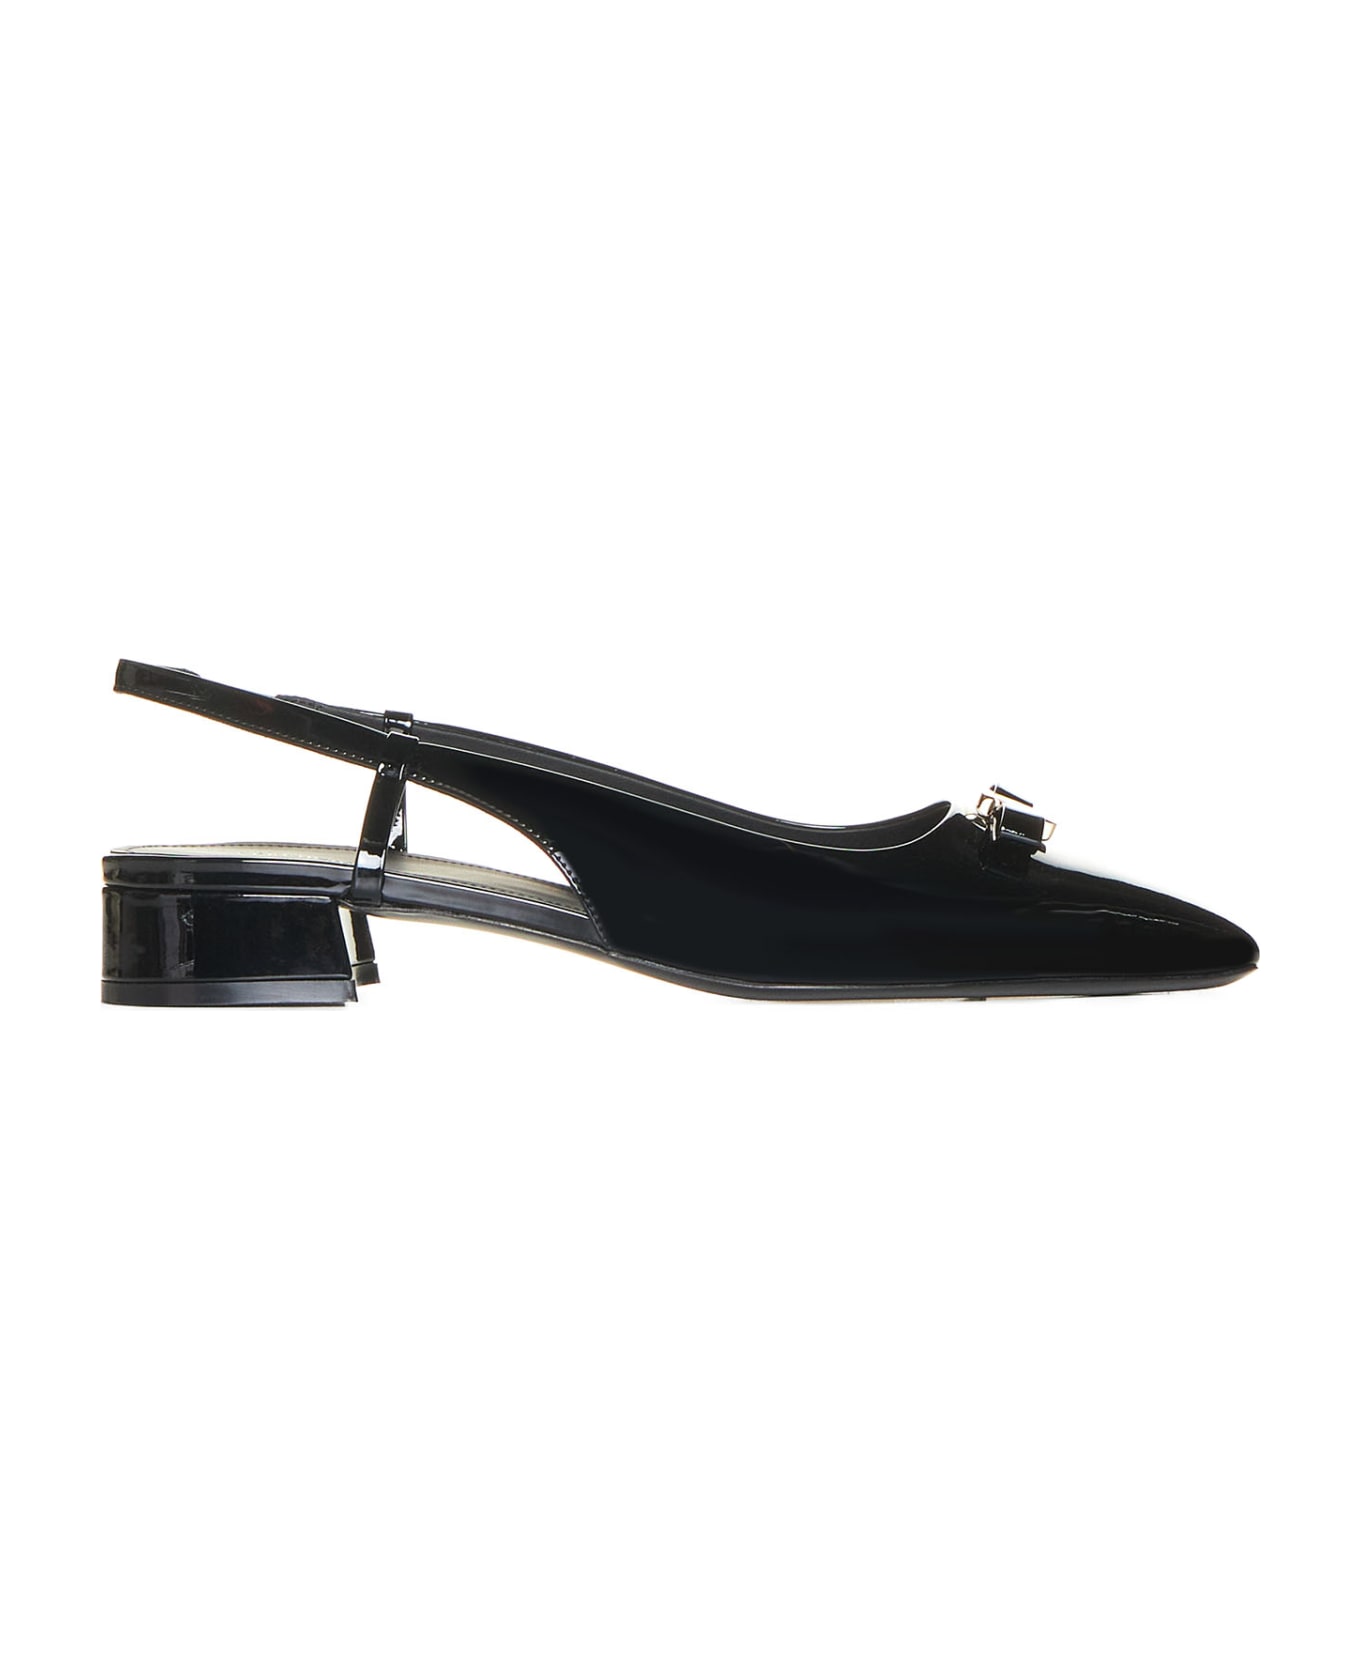 Ferragamo High-heeled shoe - Nero || nero || florence nero フラットシューズ